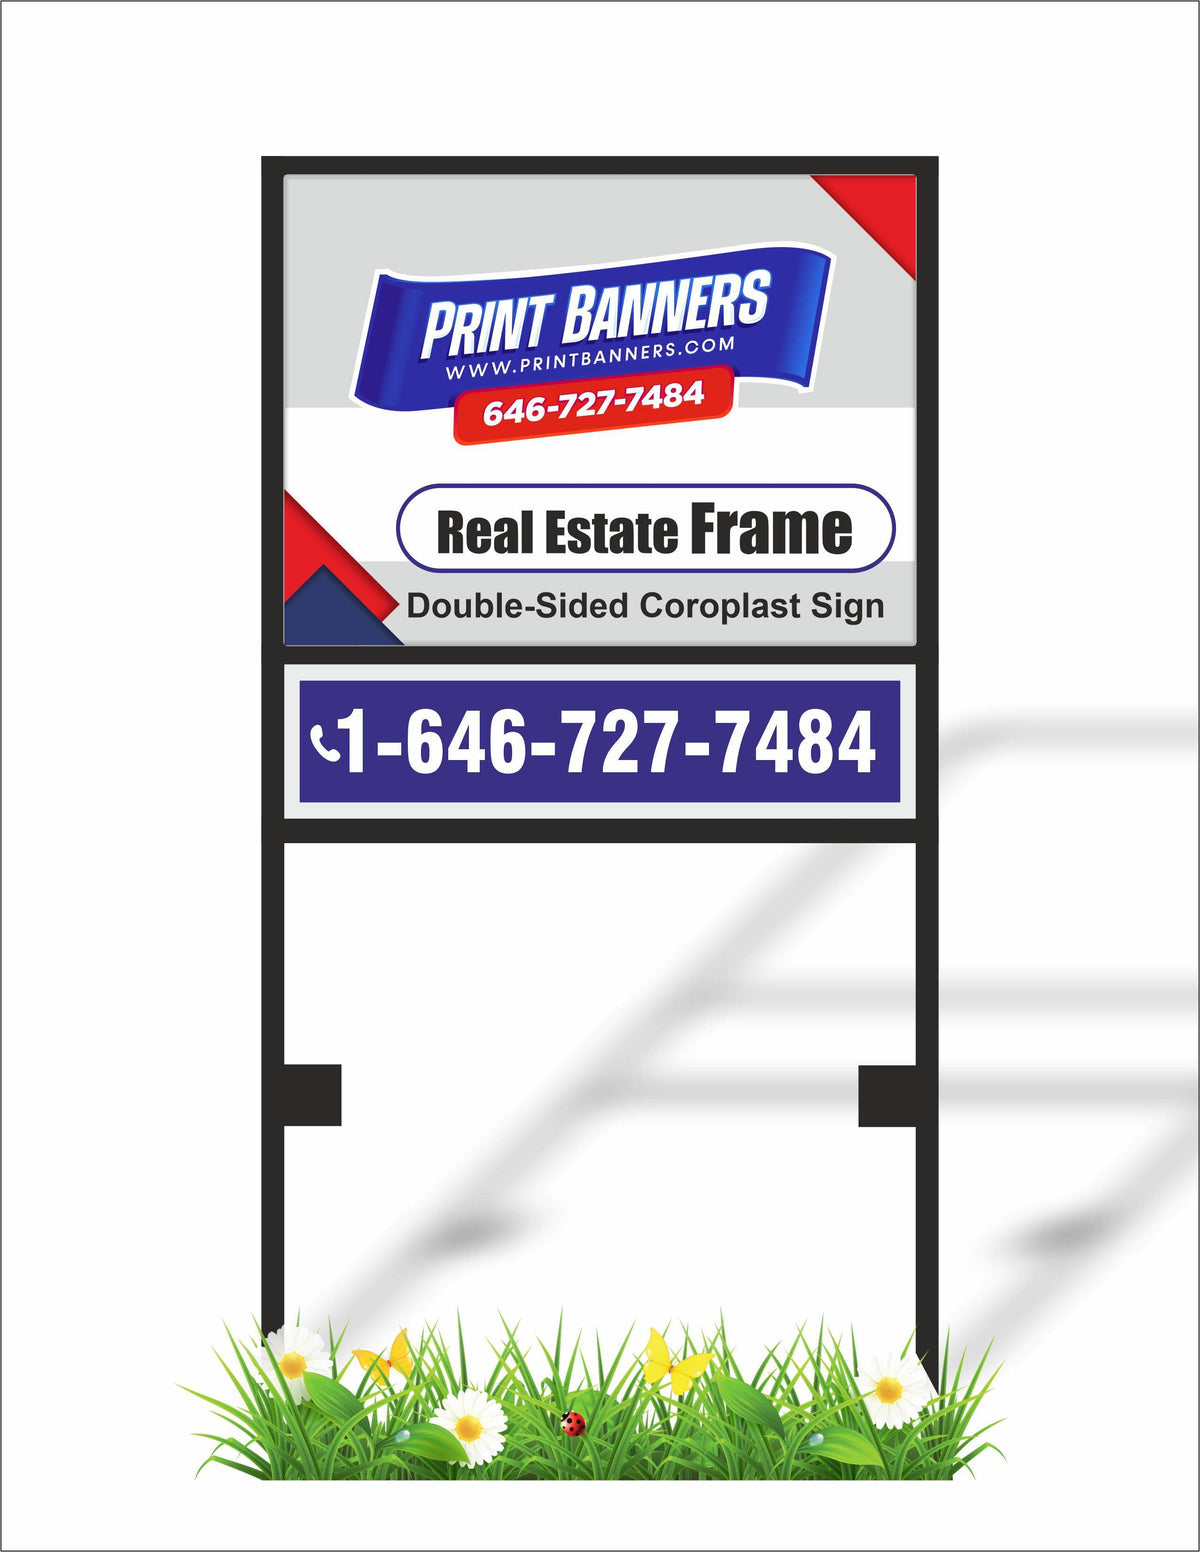 Real Estate Frame - PrintBanners